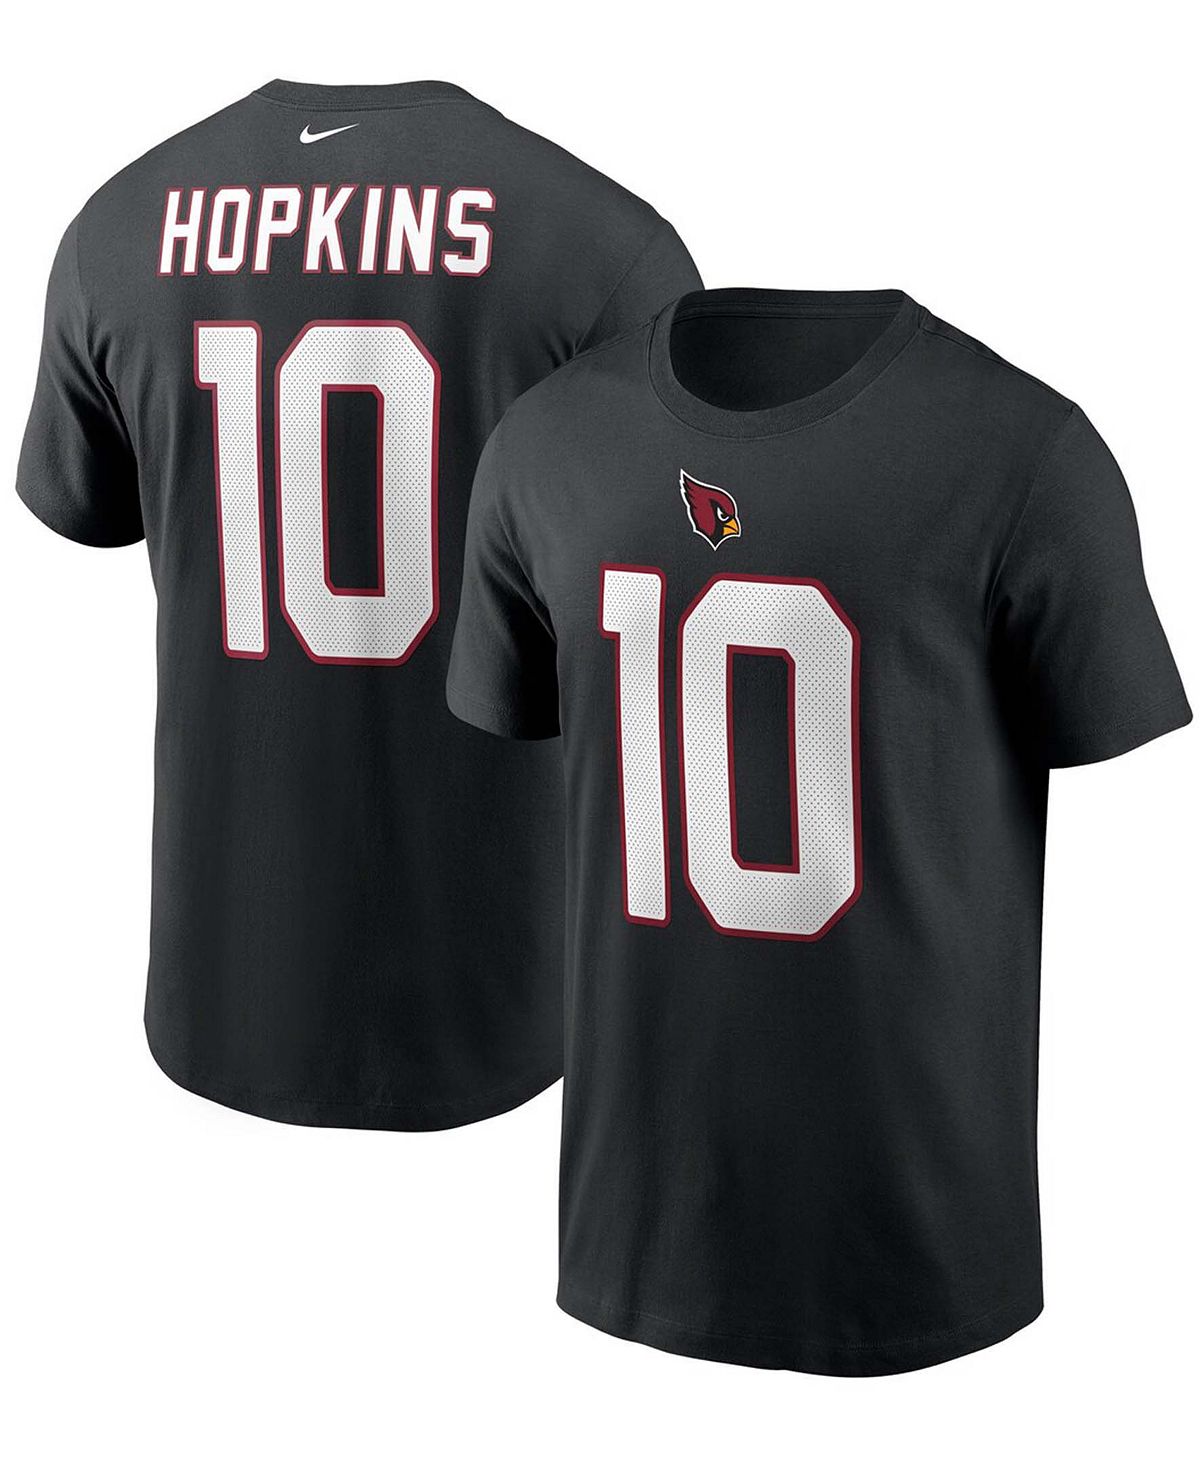 Мужская черная футболка с именем и номером DeAndre Hopkins Arizona Cardinals Nike